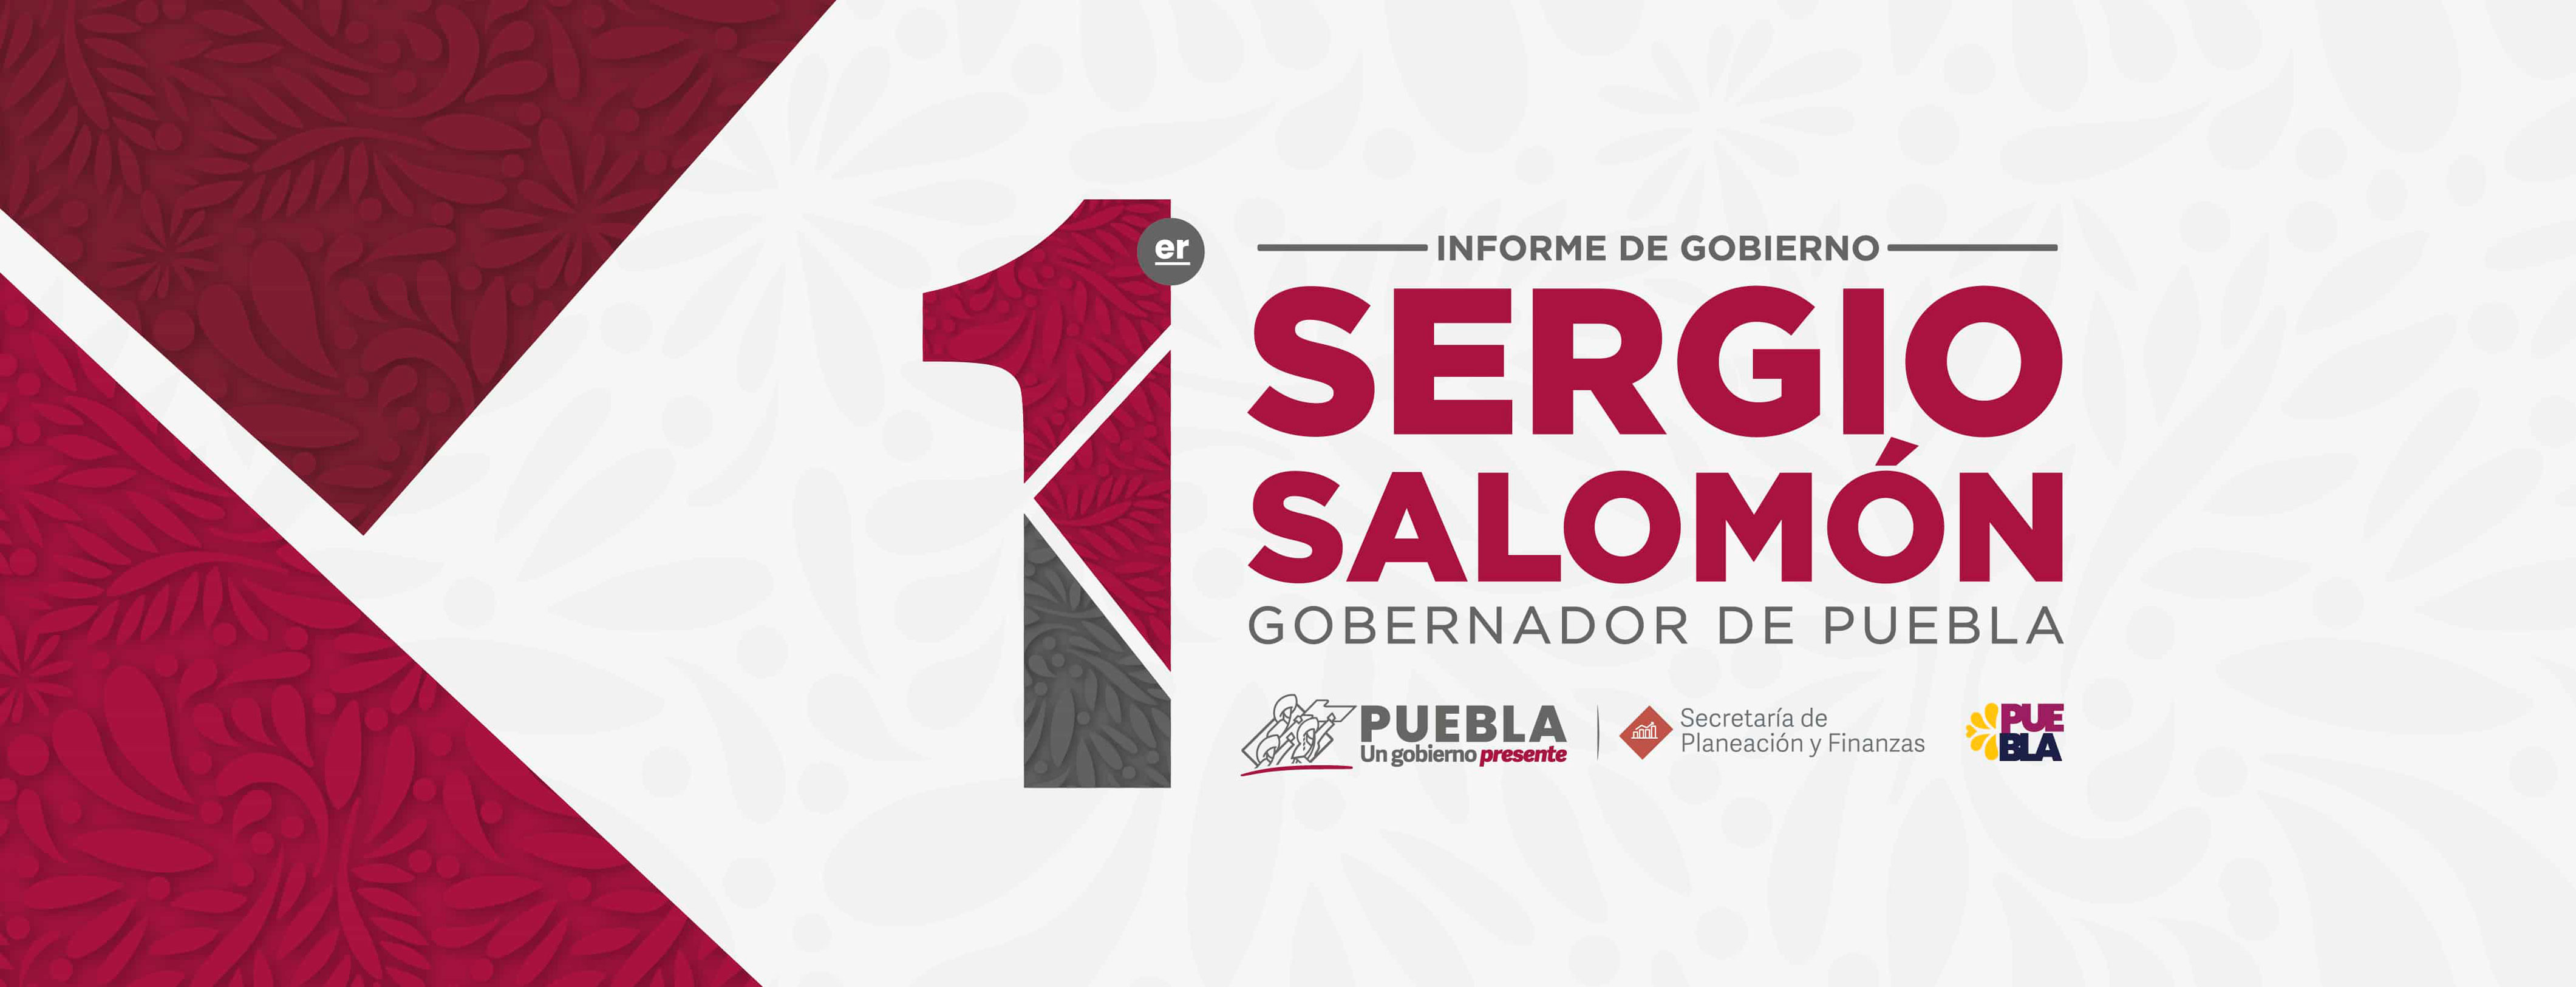 Informe de Gobierno Sergio Salomón